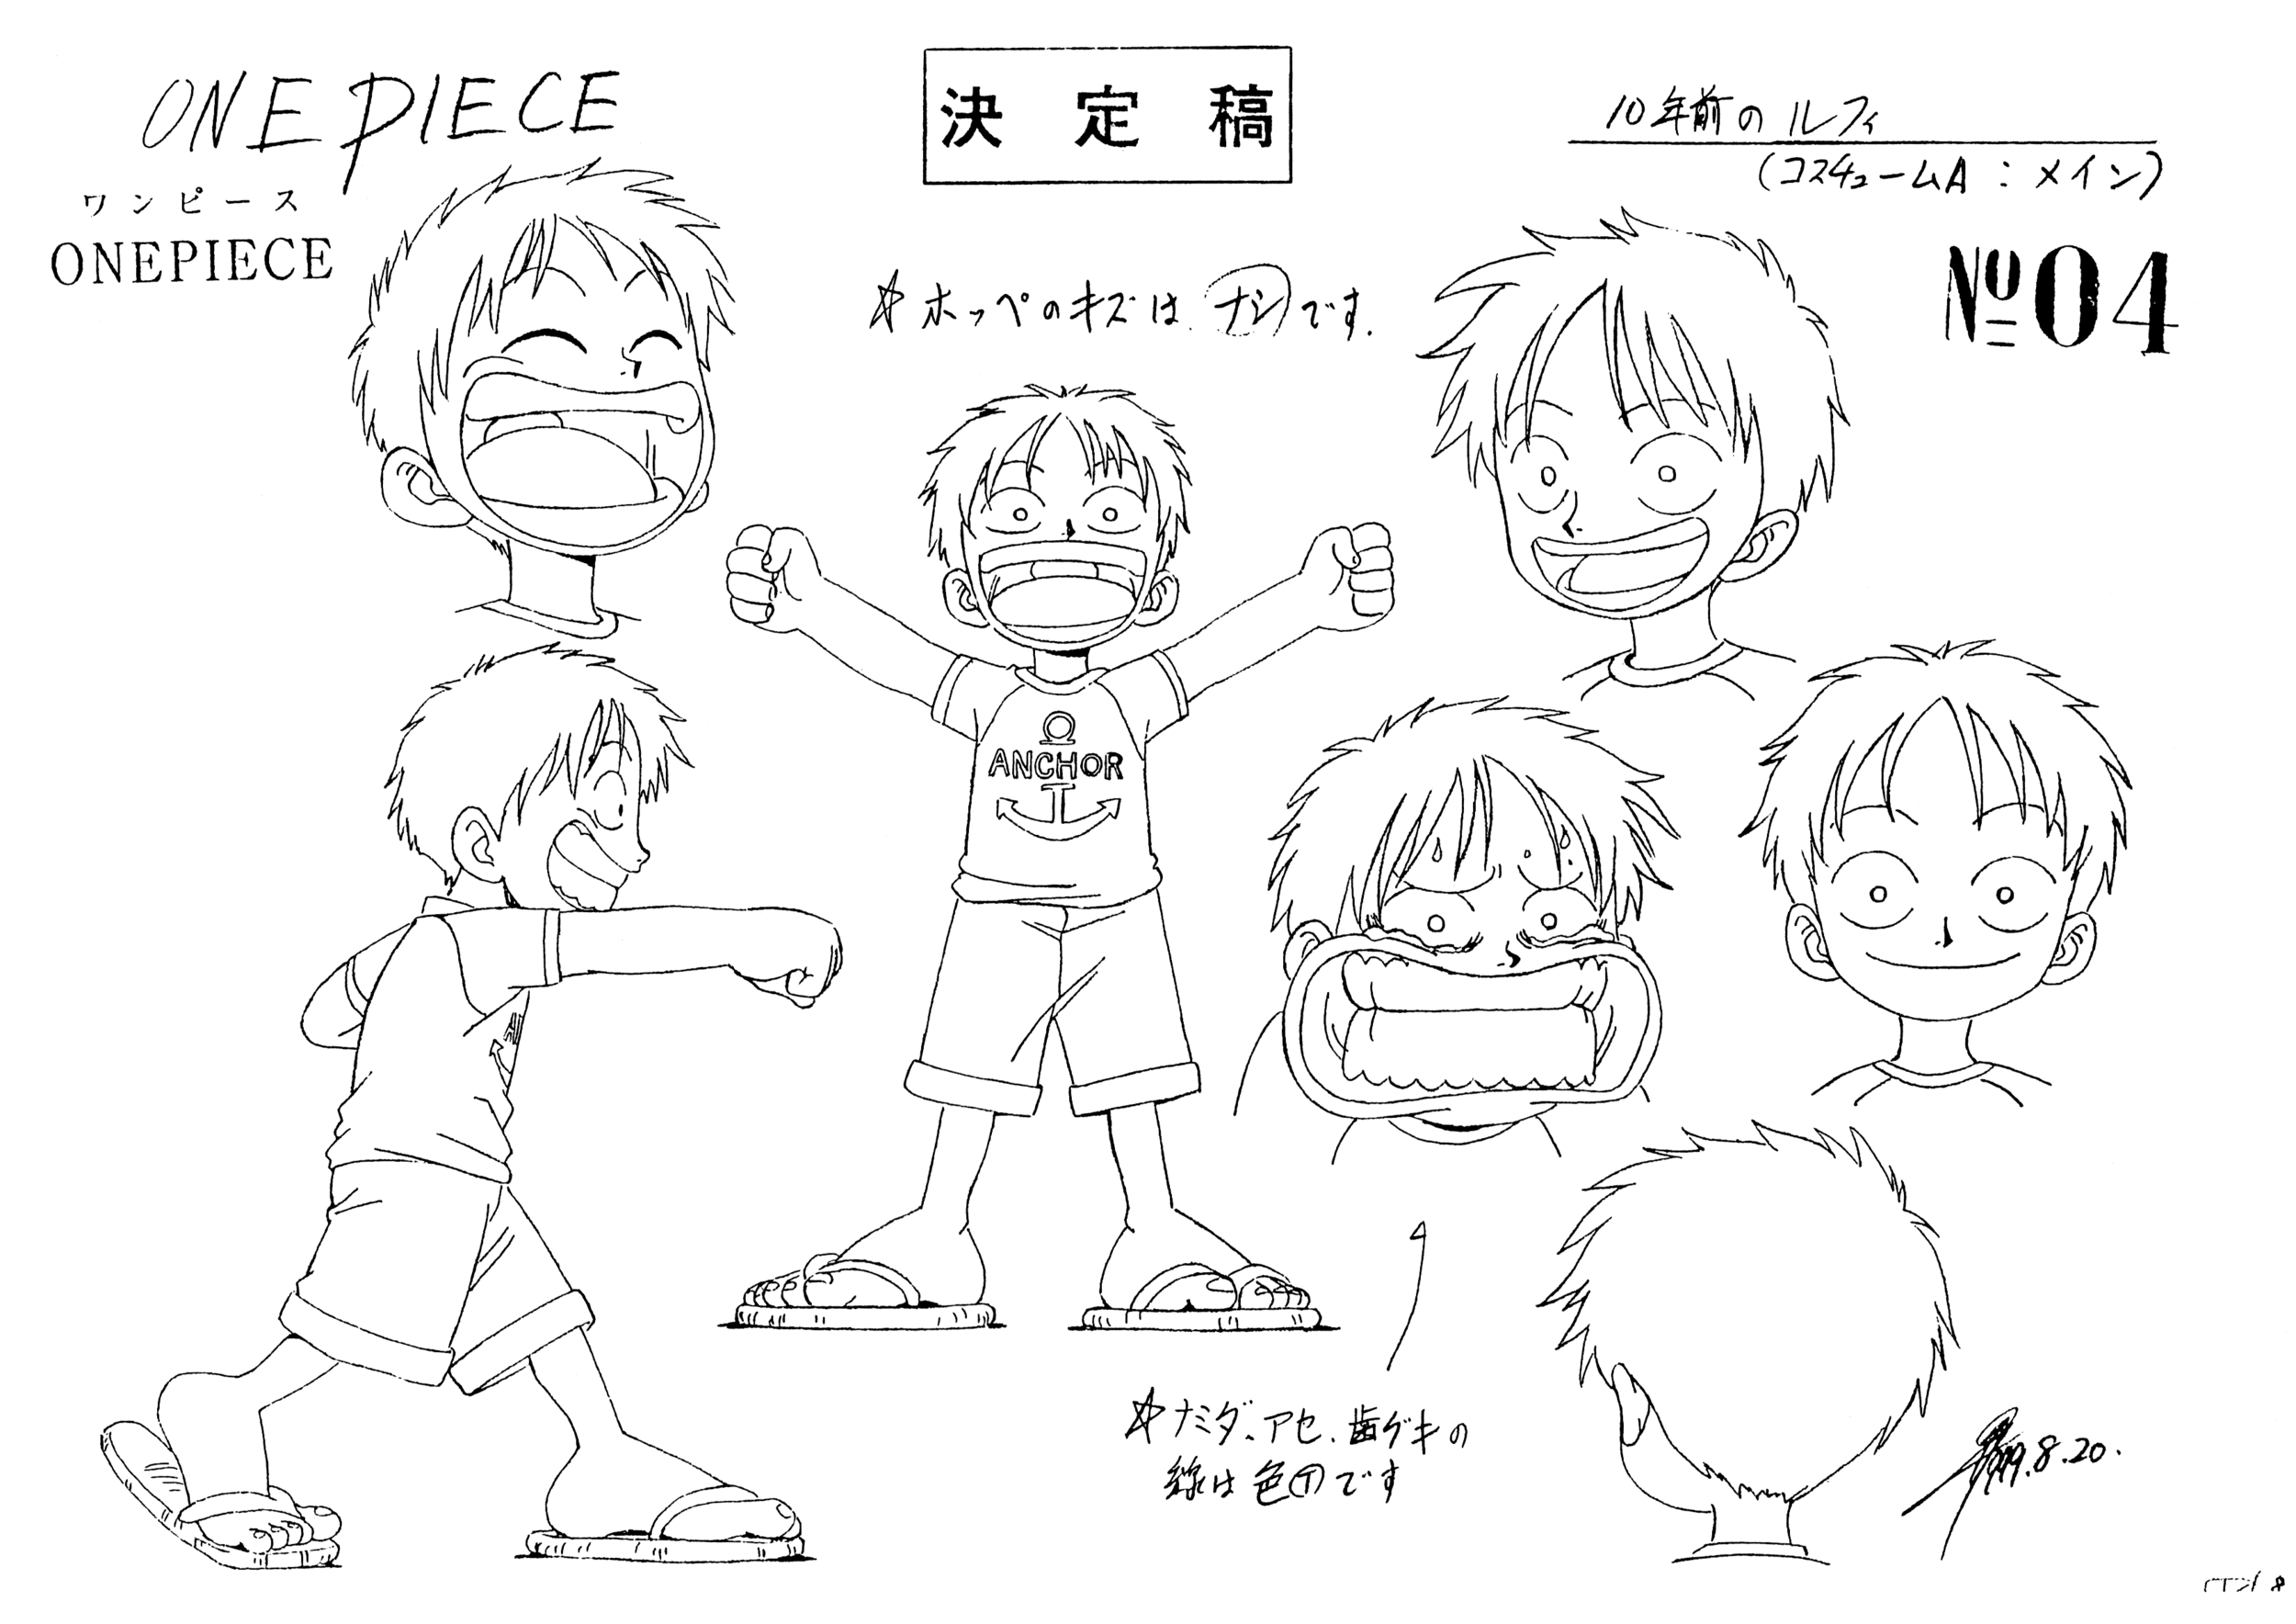 Art of One Piece